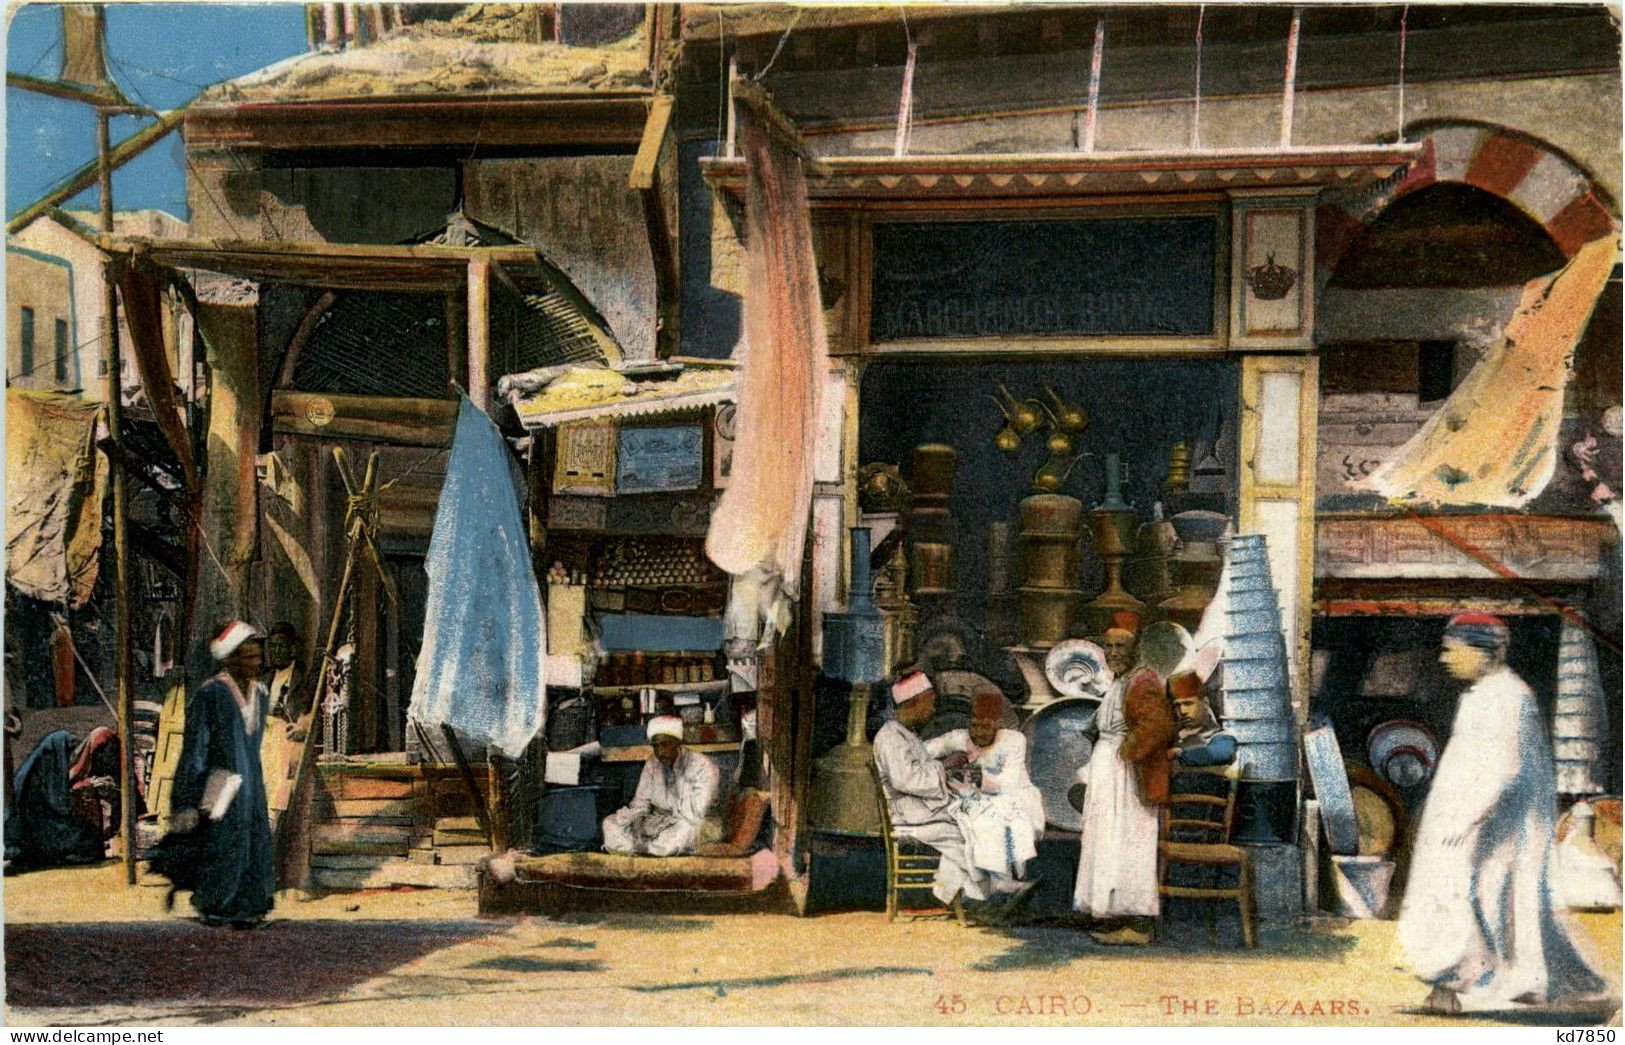 Cairo - The Bazaars - Caïro